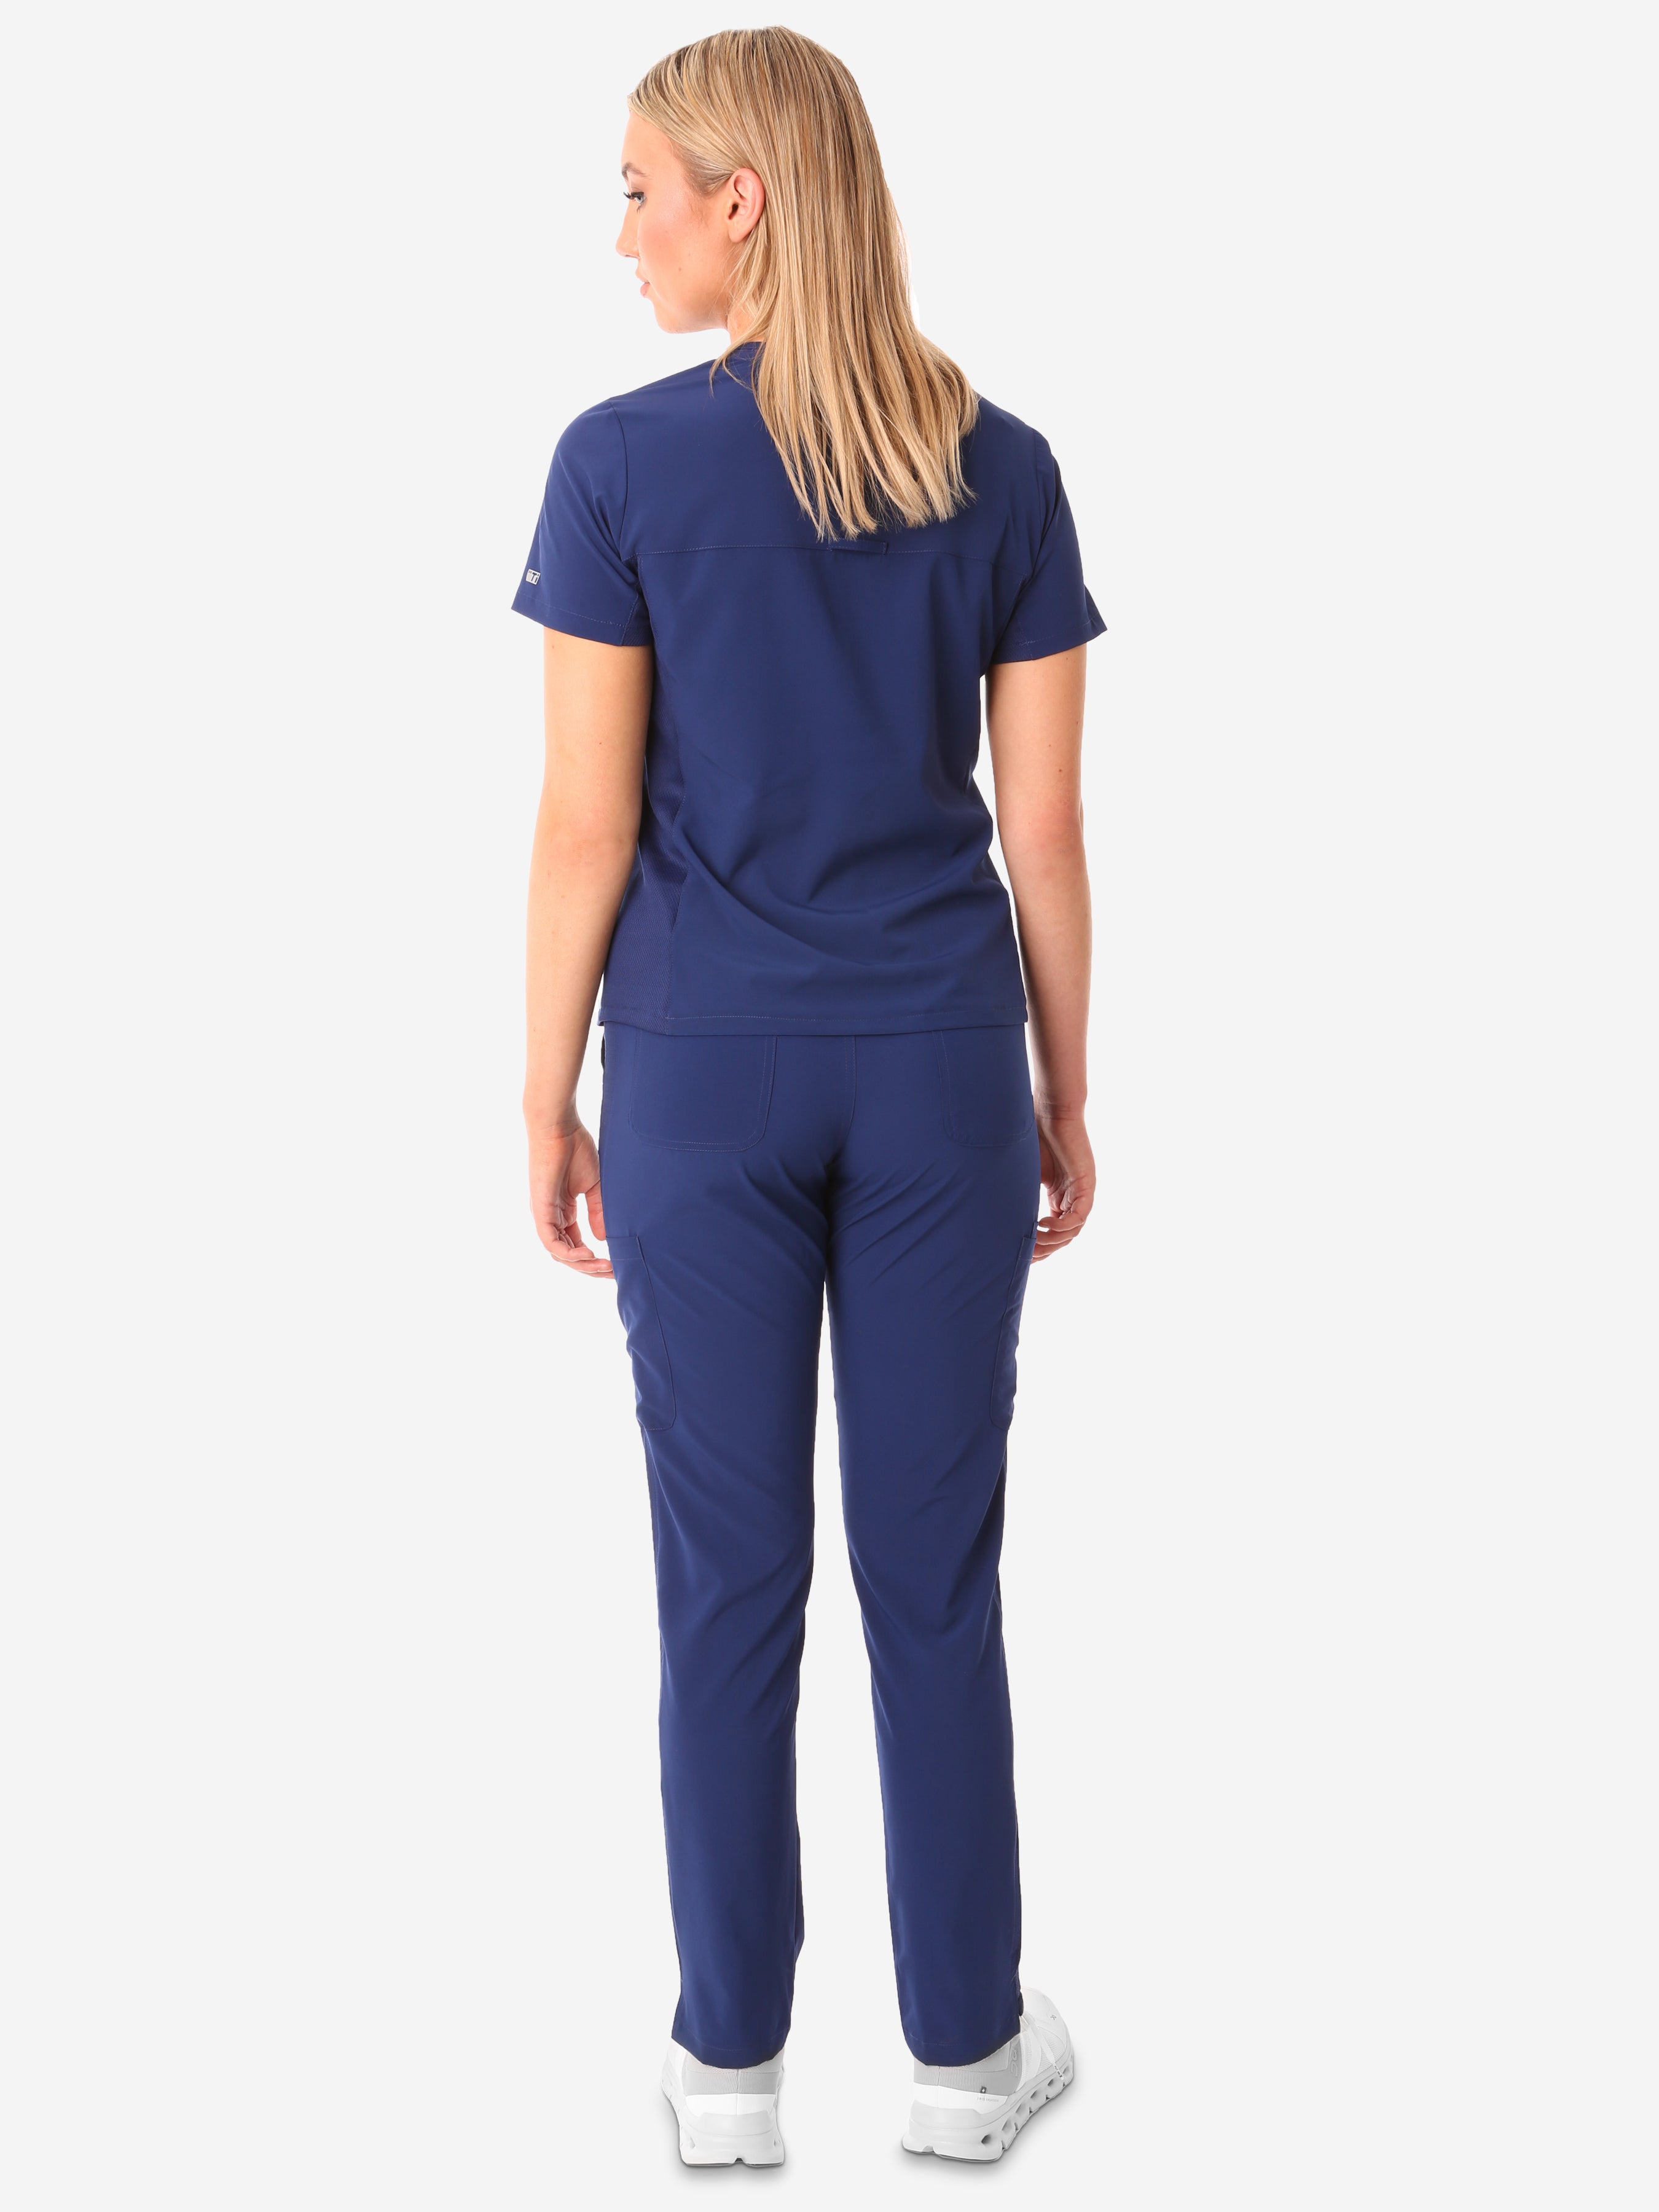 TiScrubs Navy Blue Women&#39;s Stretch 9-Pocket Pants and Stash-Pocket Top Back View Full Body